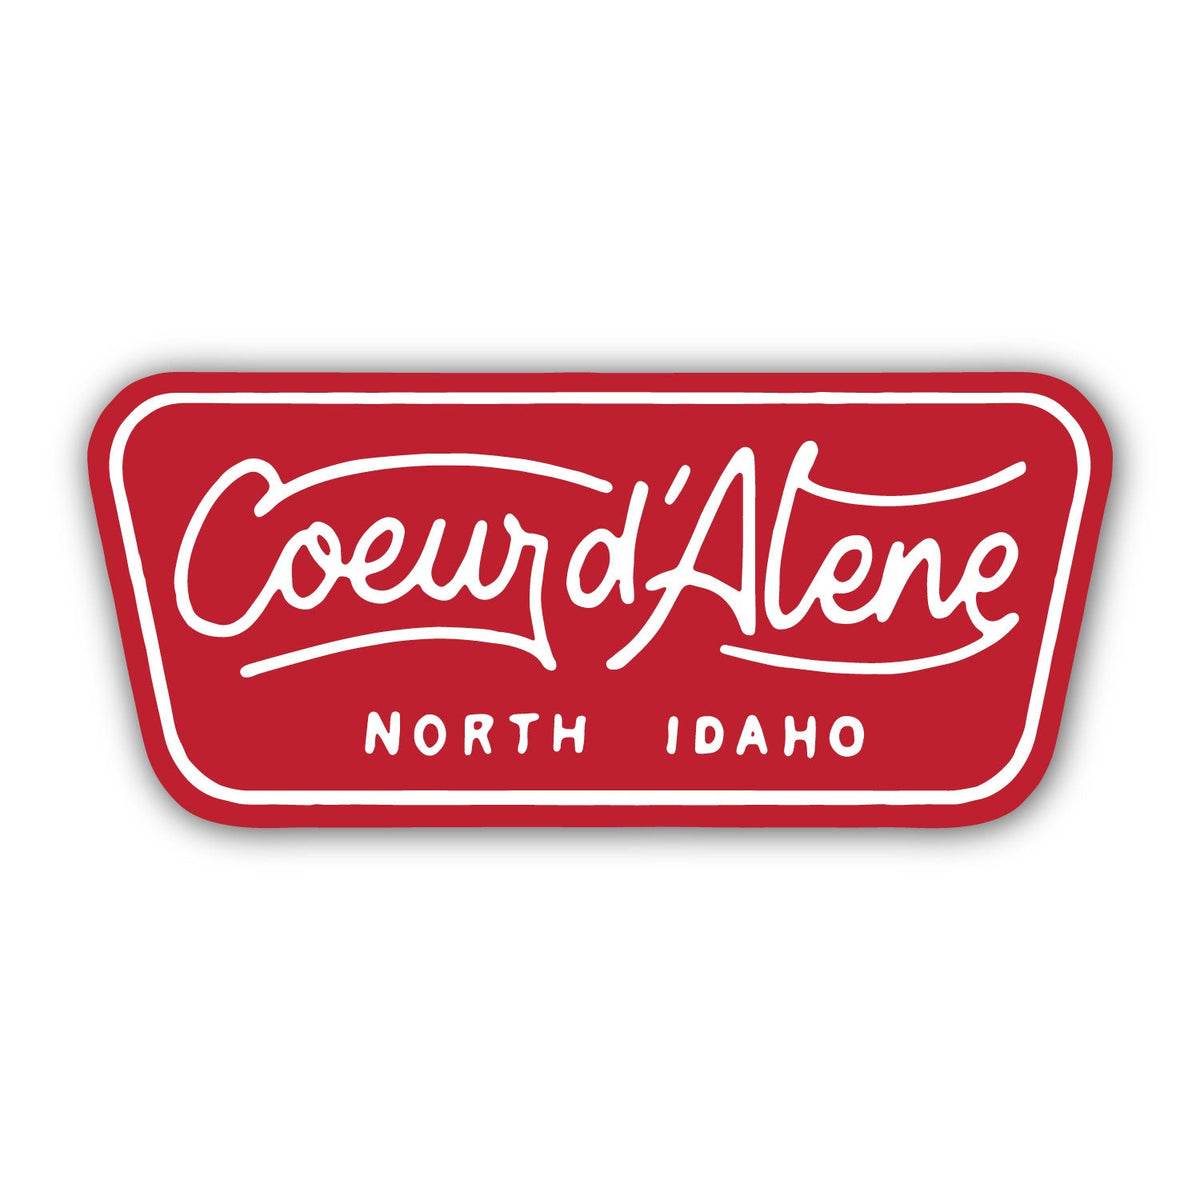 Classy Coeur d'Alene North Idaho Sticker